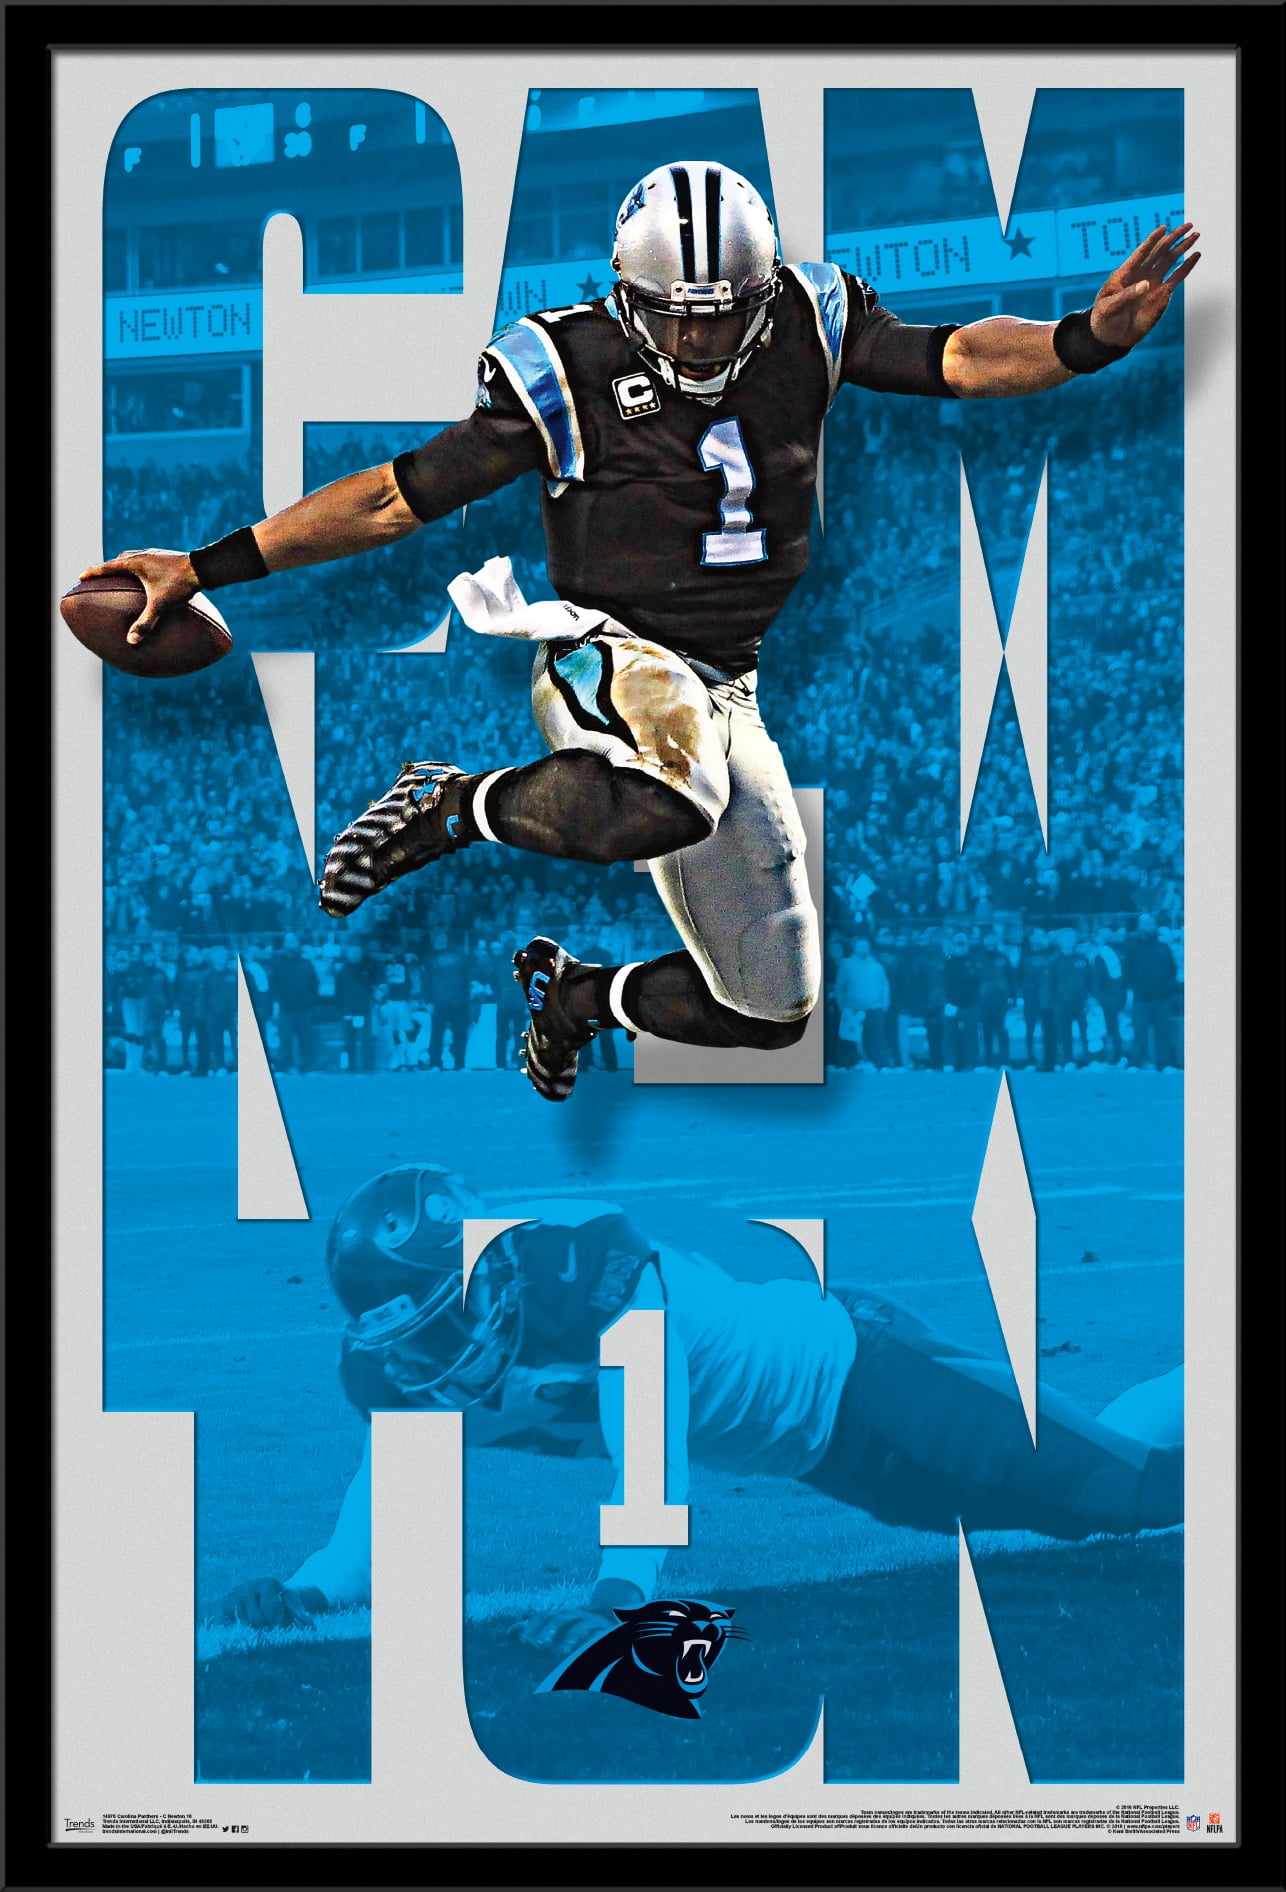 Kids Wall Decor Cam Newton Carolina Panthers Poster Football Fan